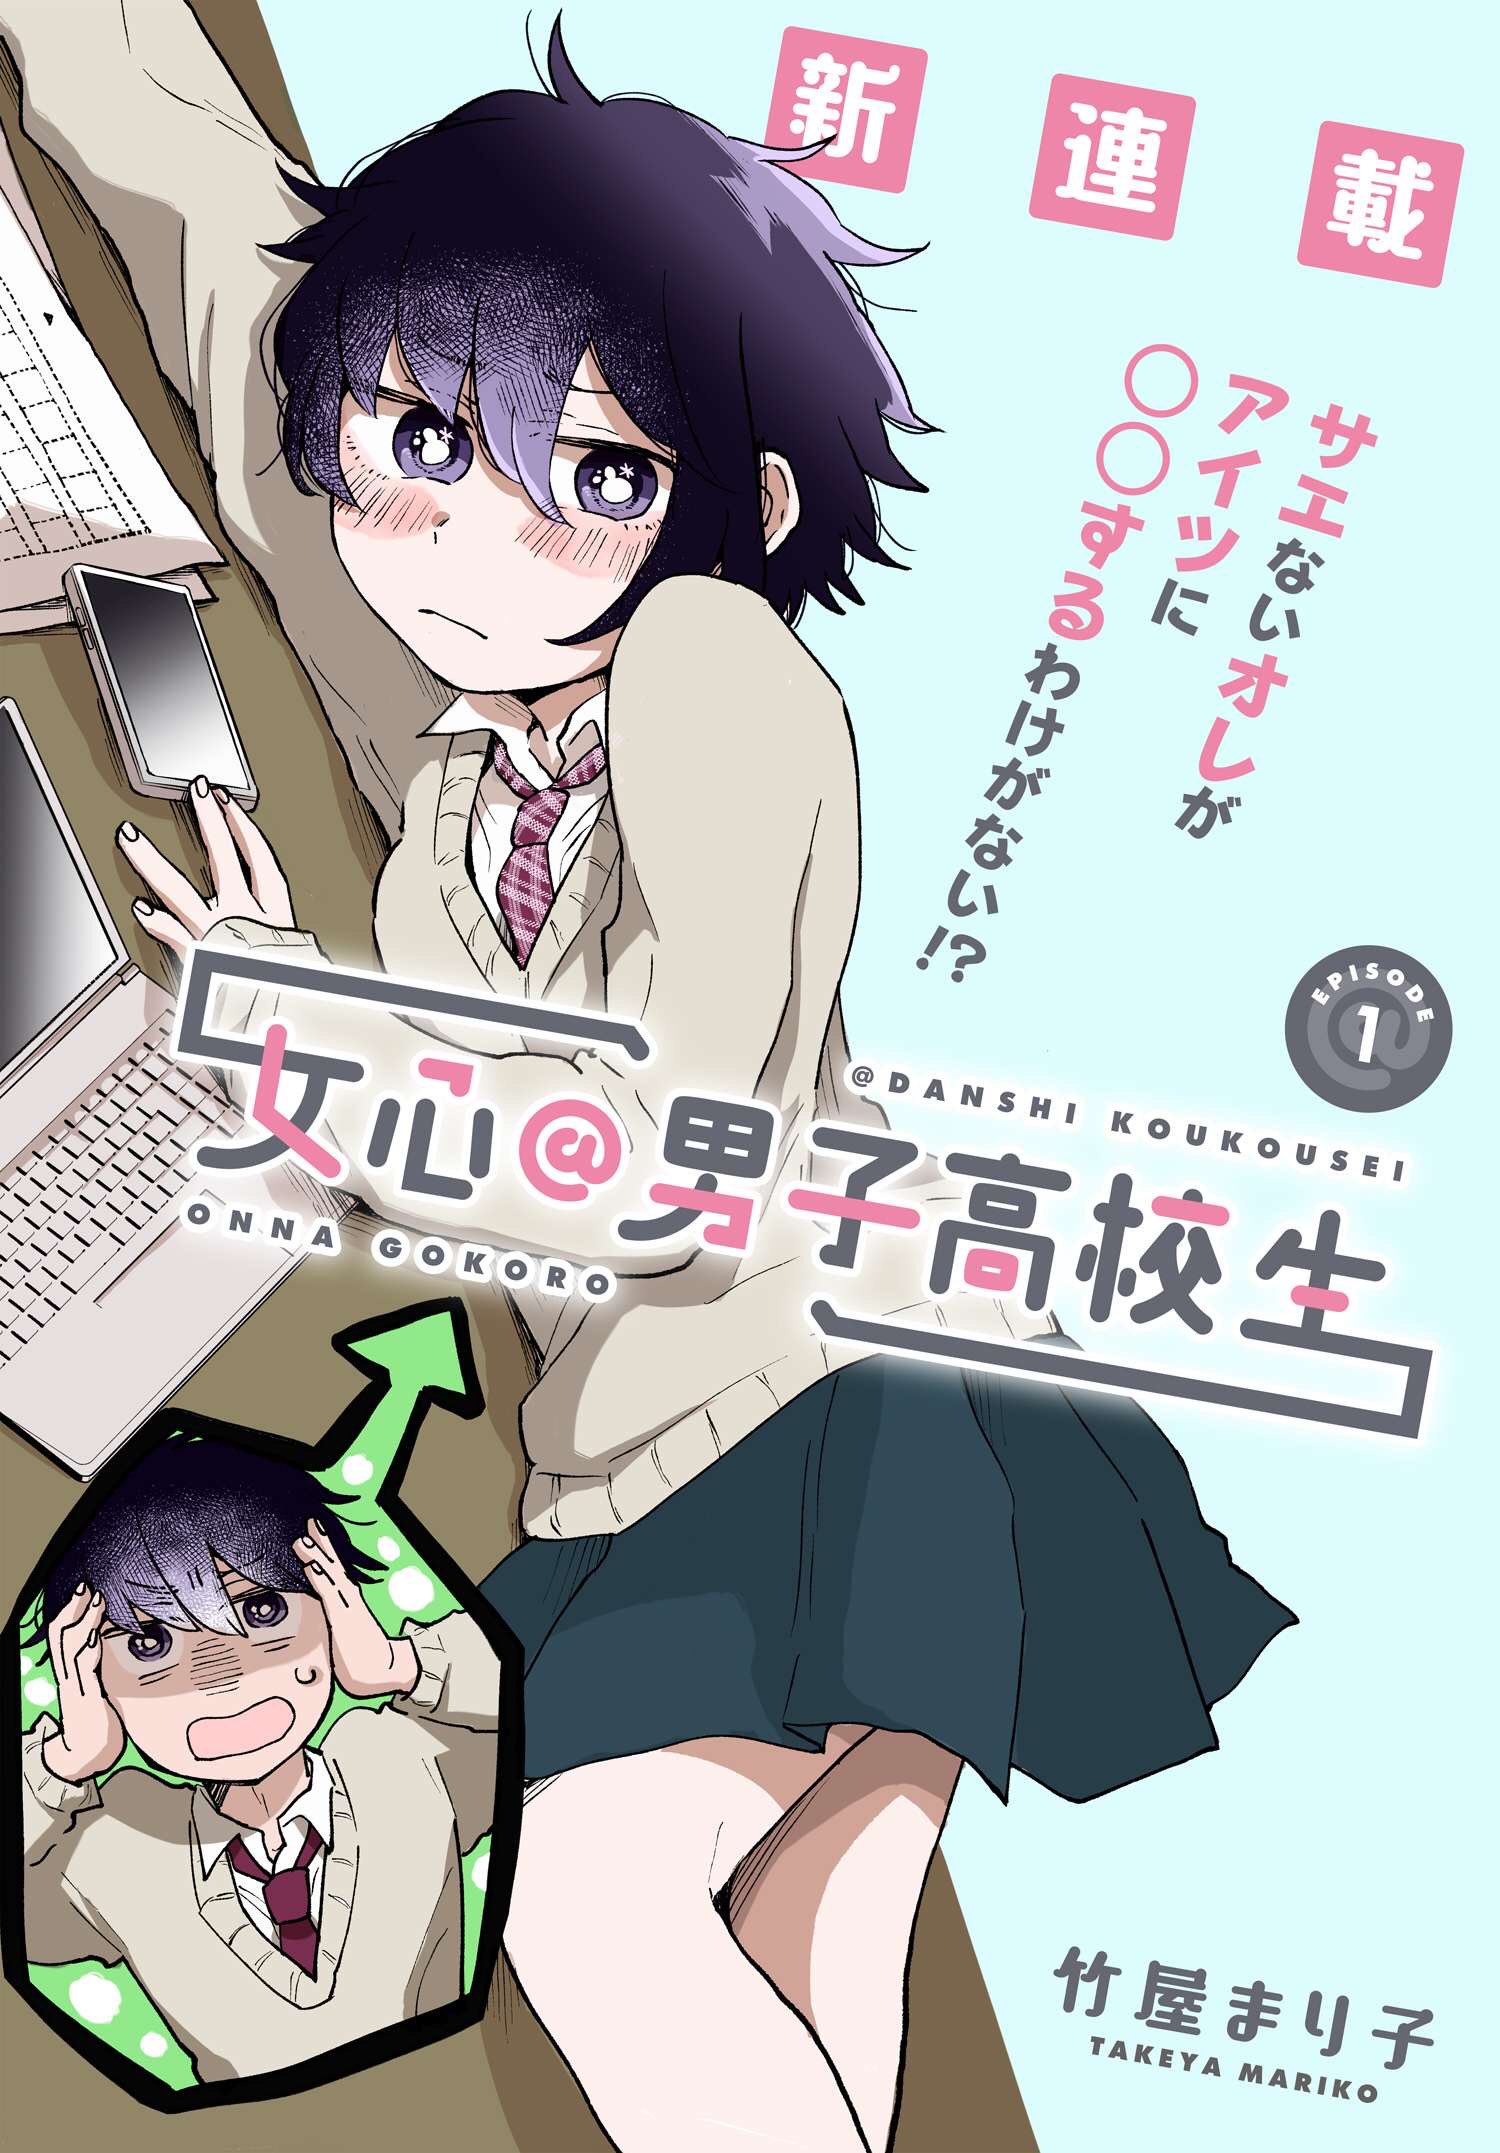 Girl's Heart @ High School Boy manga